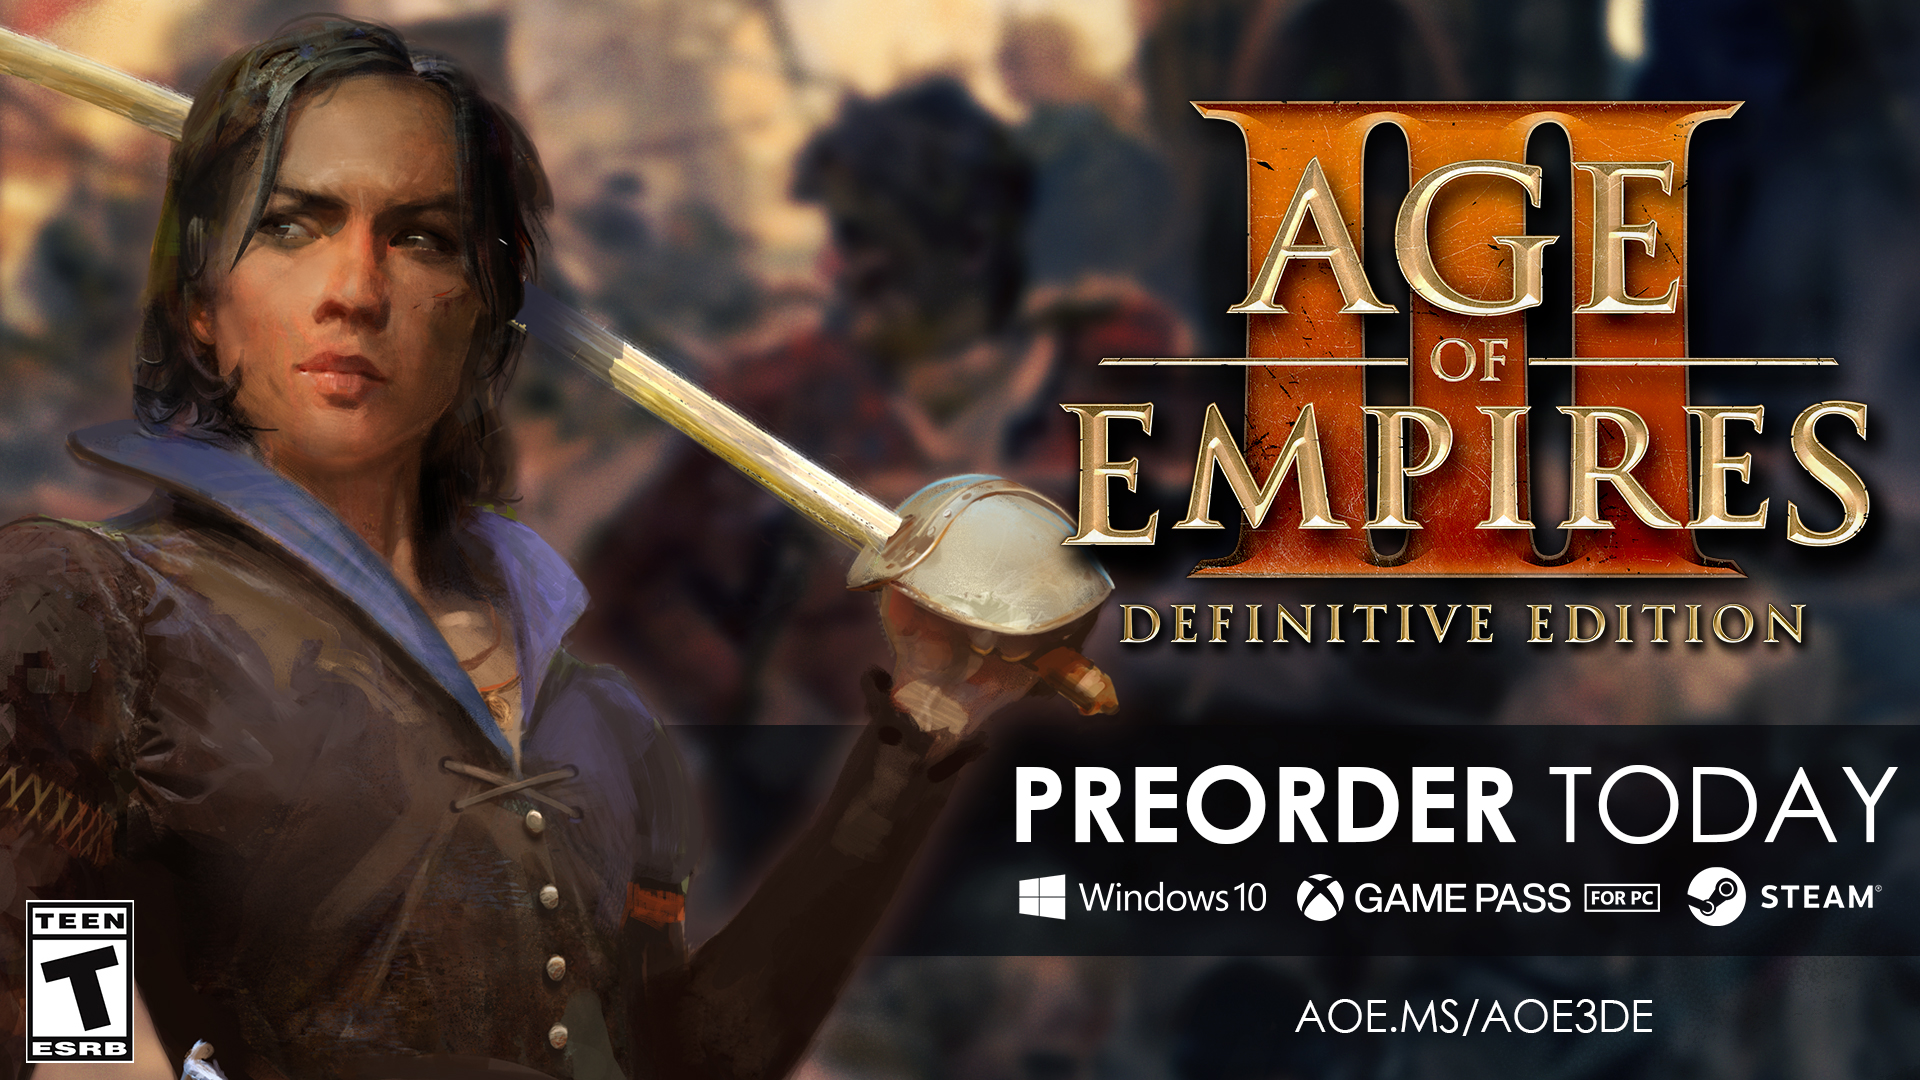 Age of empires iii mac free download windows 7